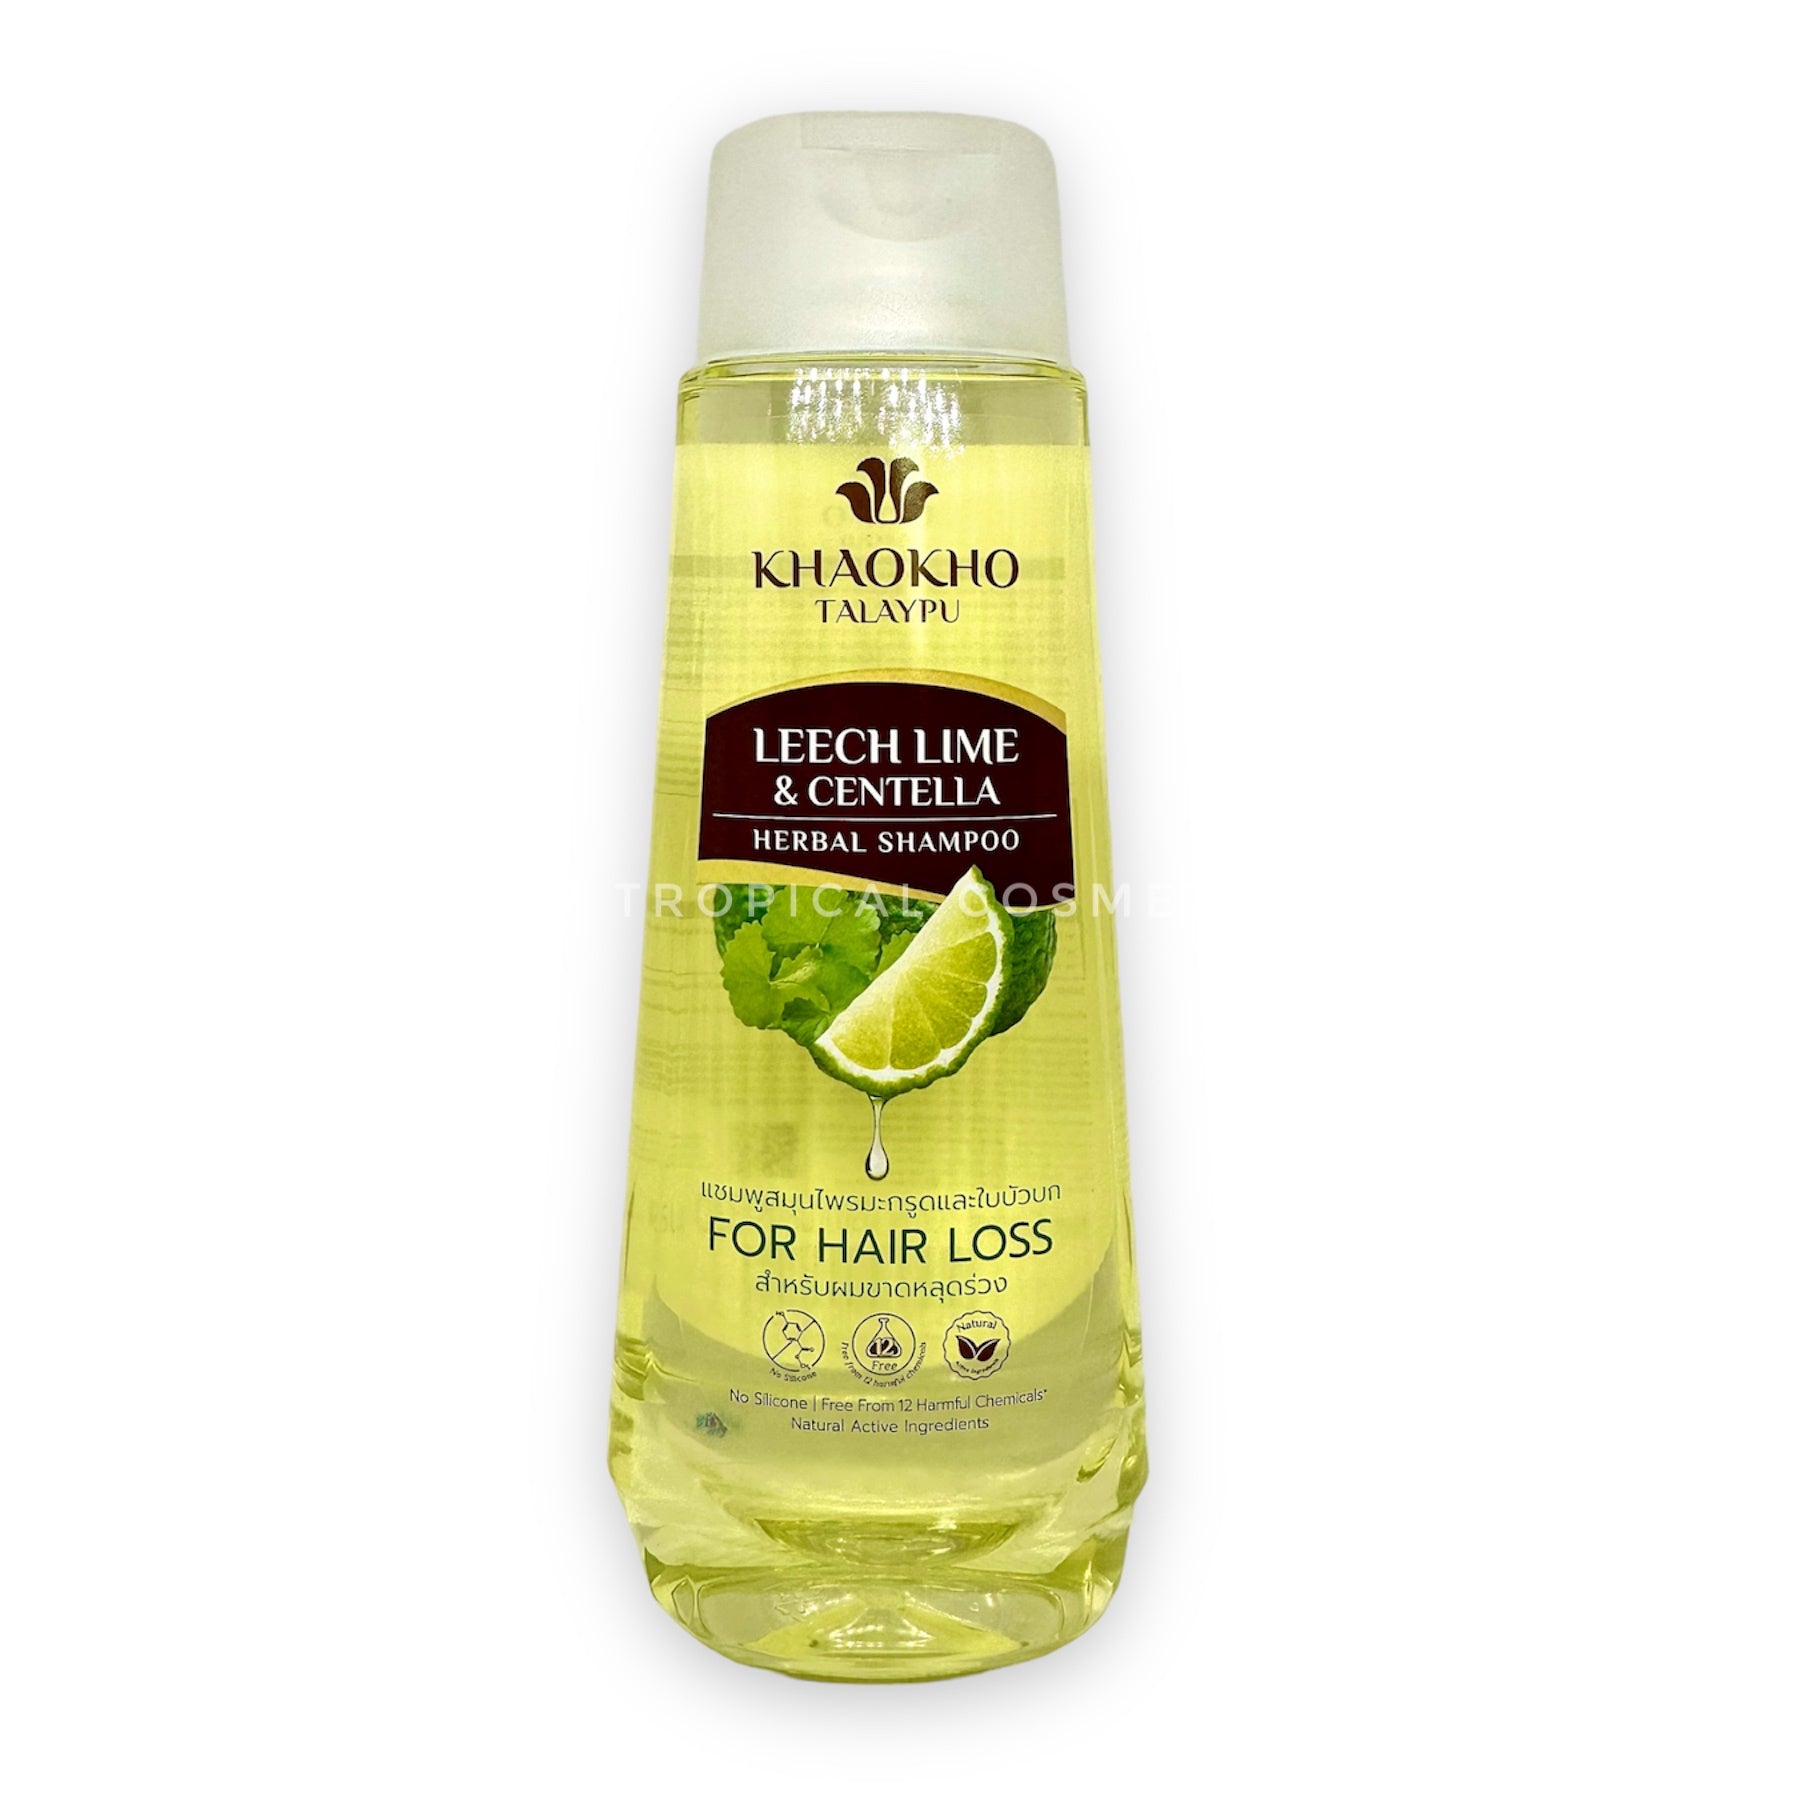 KHAOKHO TALAYPU Leech Lime & Centella Herbal Shampoo 330 ml., Травяной шампунь "Лайм и центелла" от выпадения волос 330 мл.